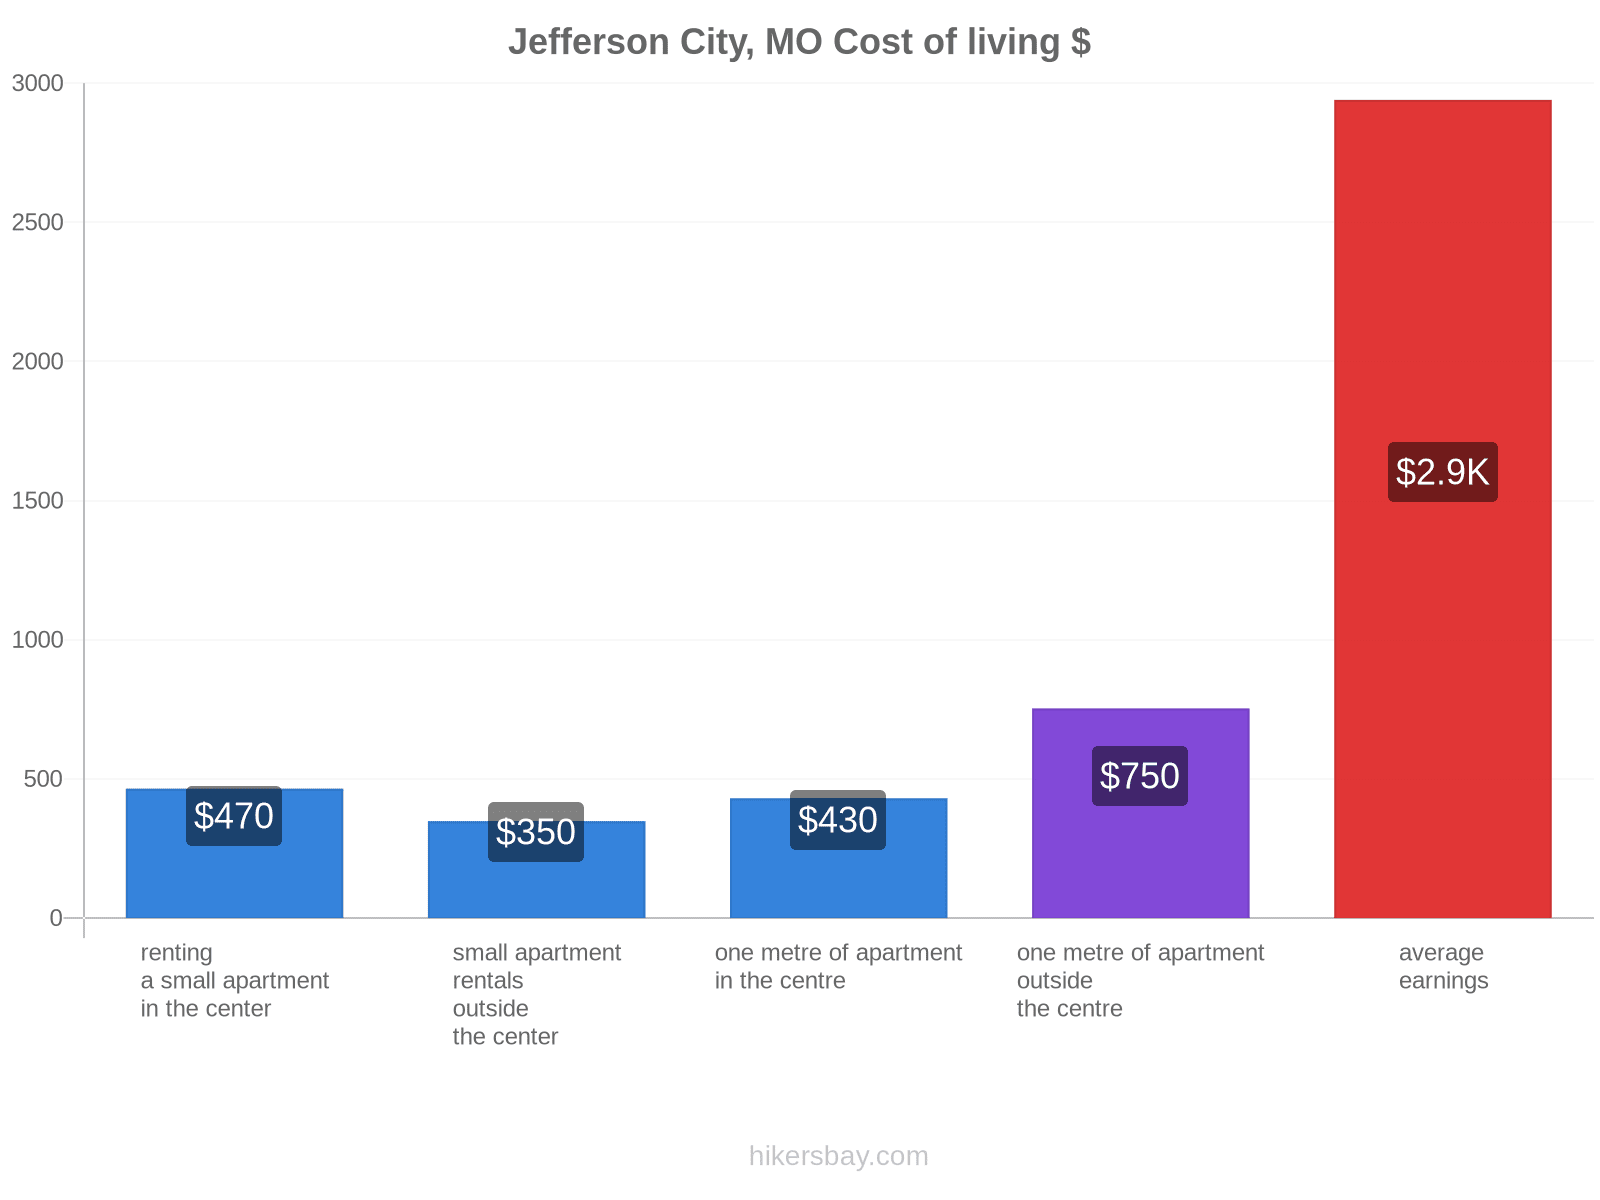 Jefferson City, MO cost of living hikersbay.com